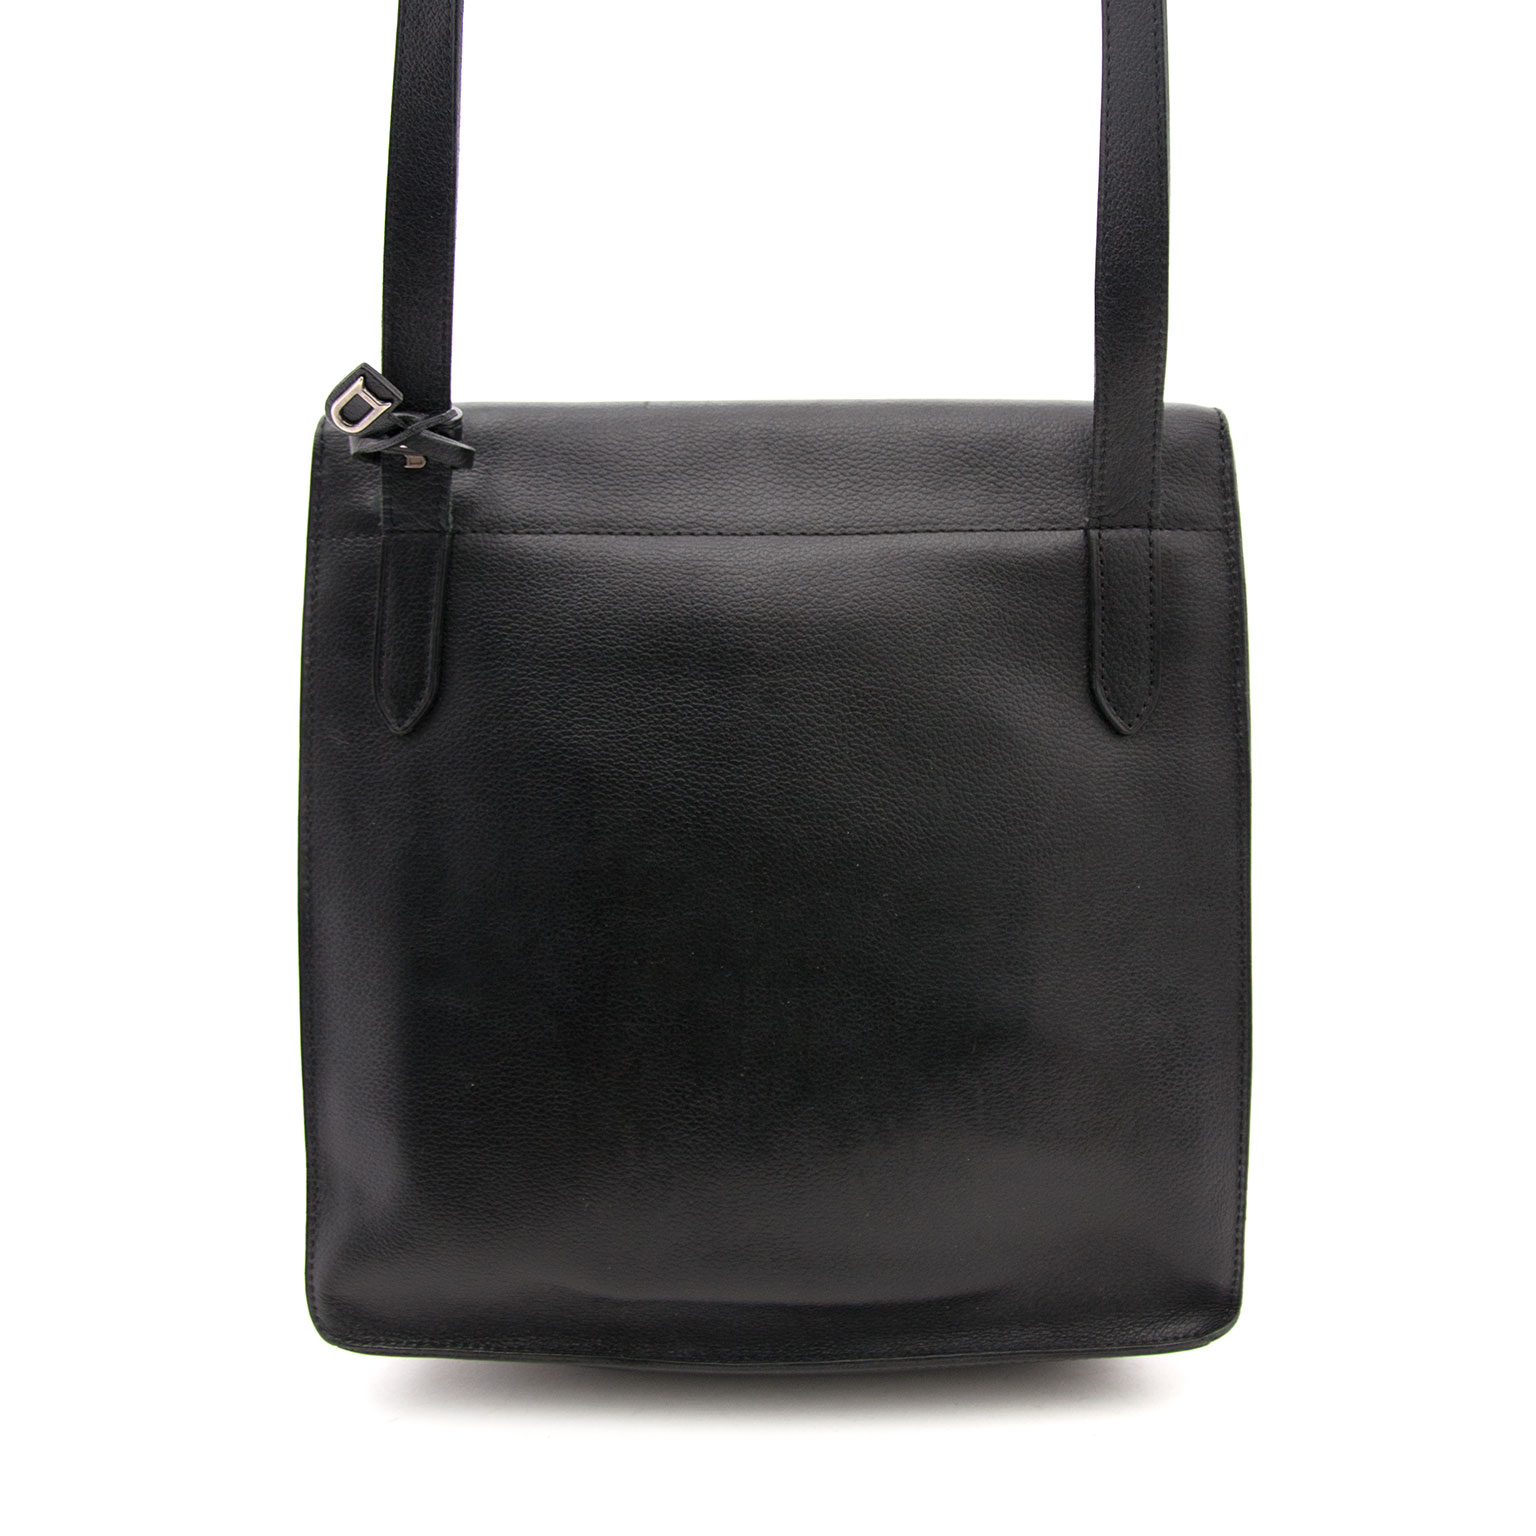 Shop Authentic Vintage Luxury Designer Handbags Online. Vind ...